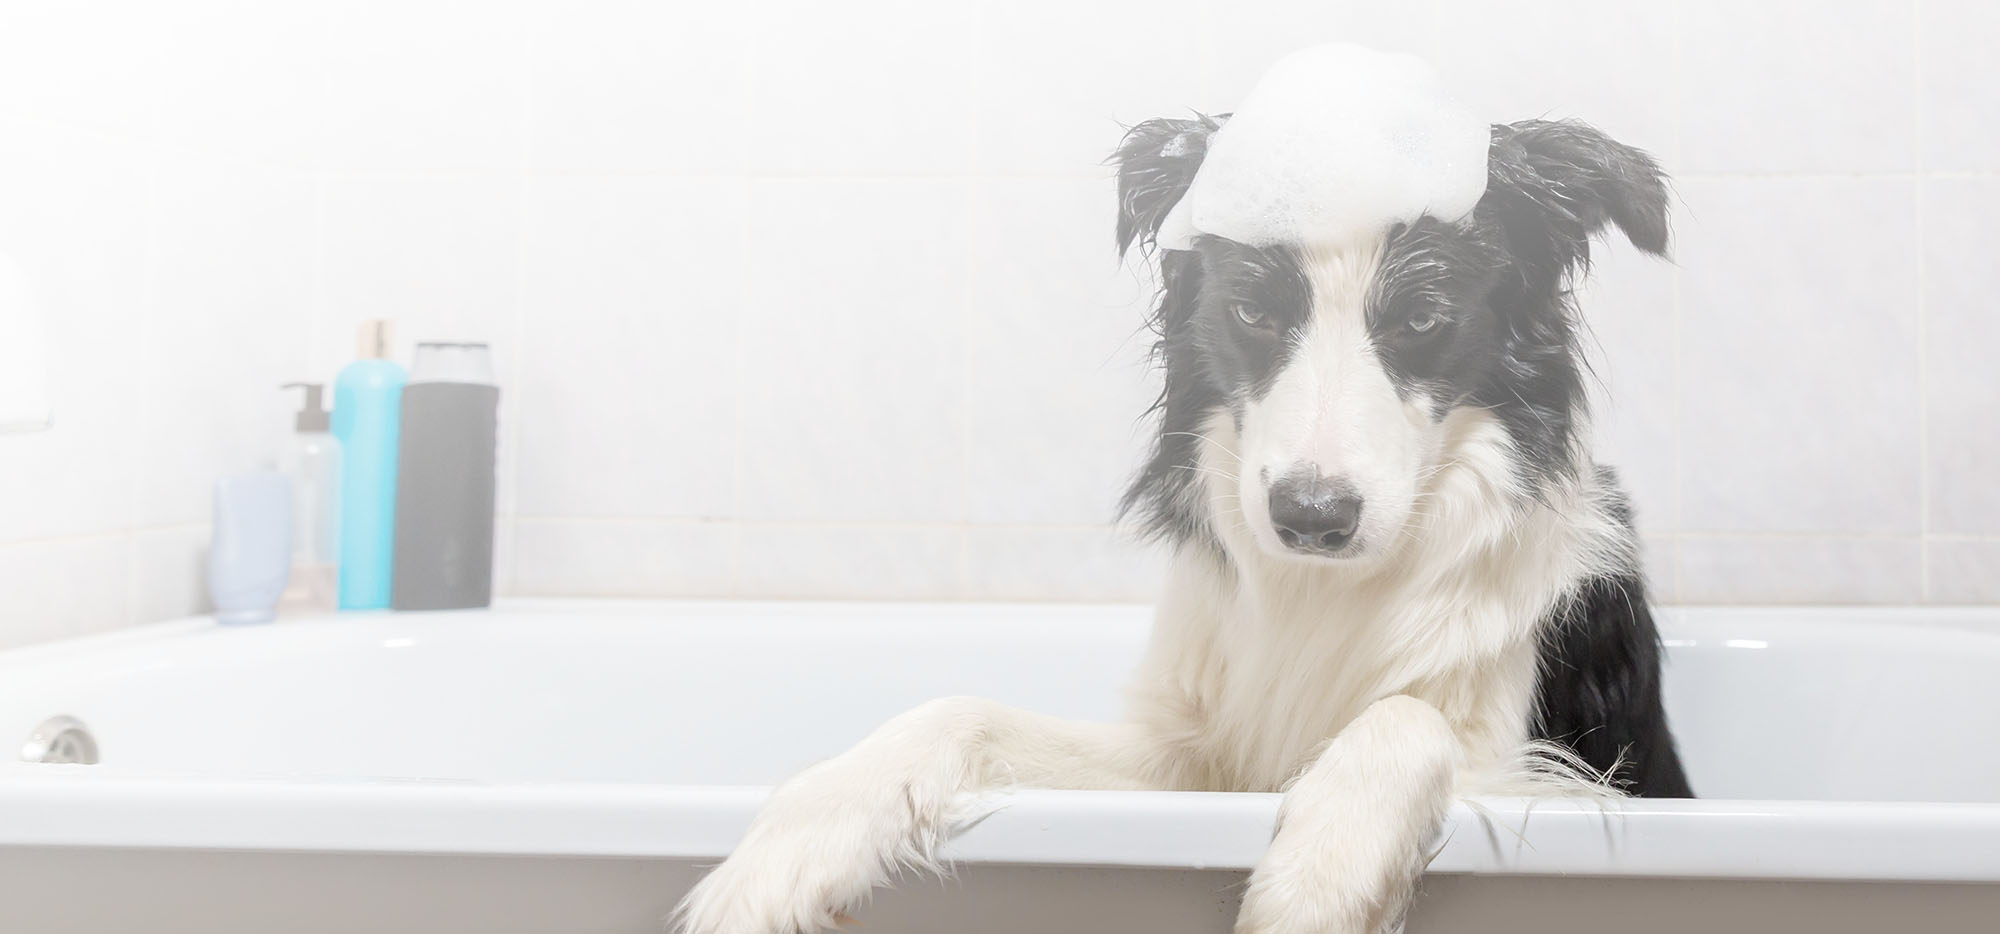 Dog with displeased expression sitting in bathtub